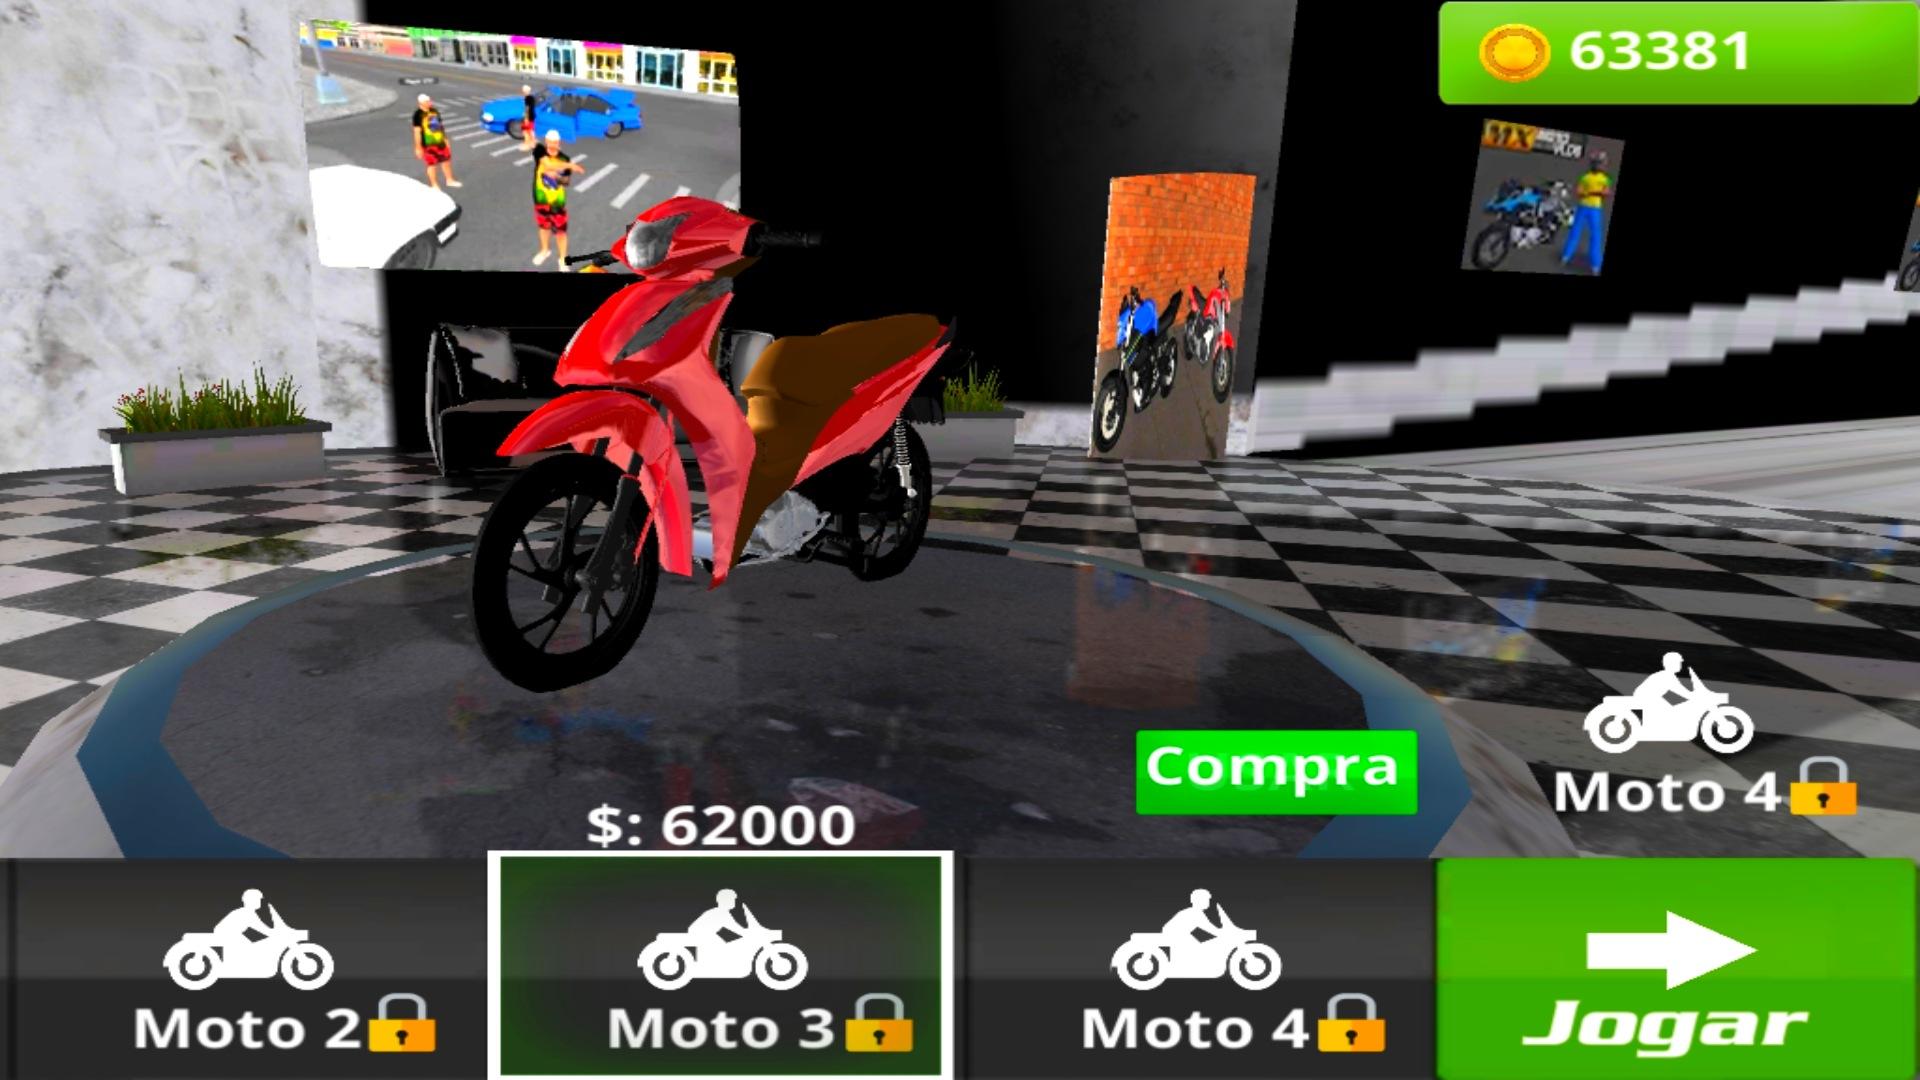 Motos Do Grau for Android - Download